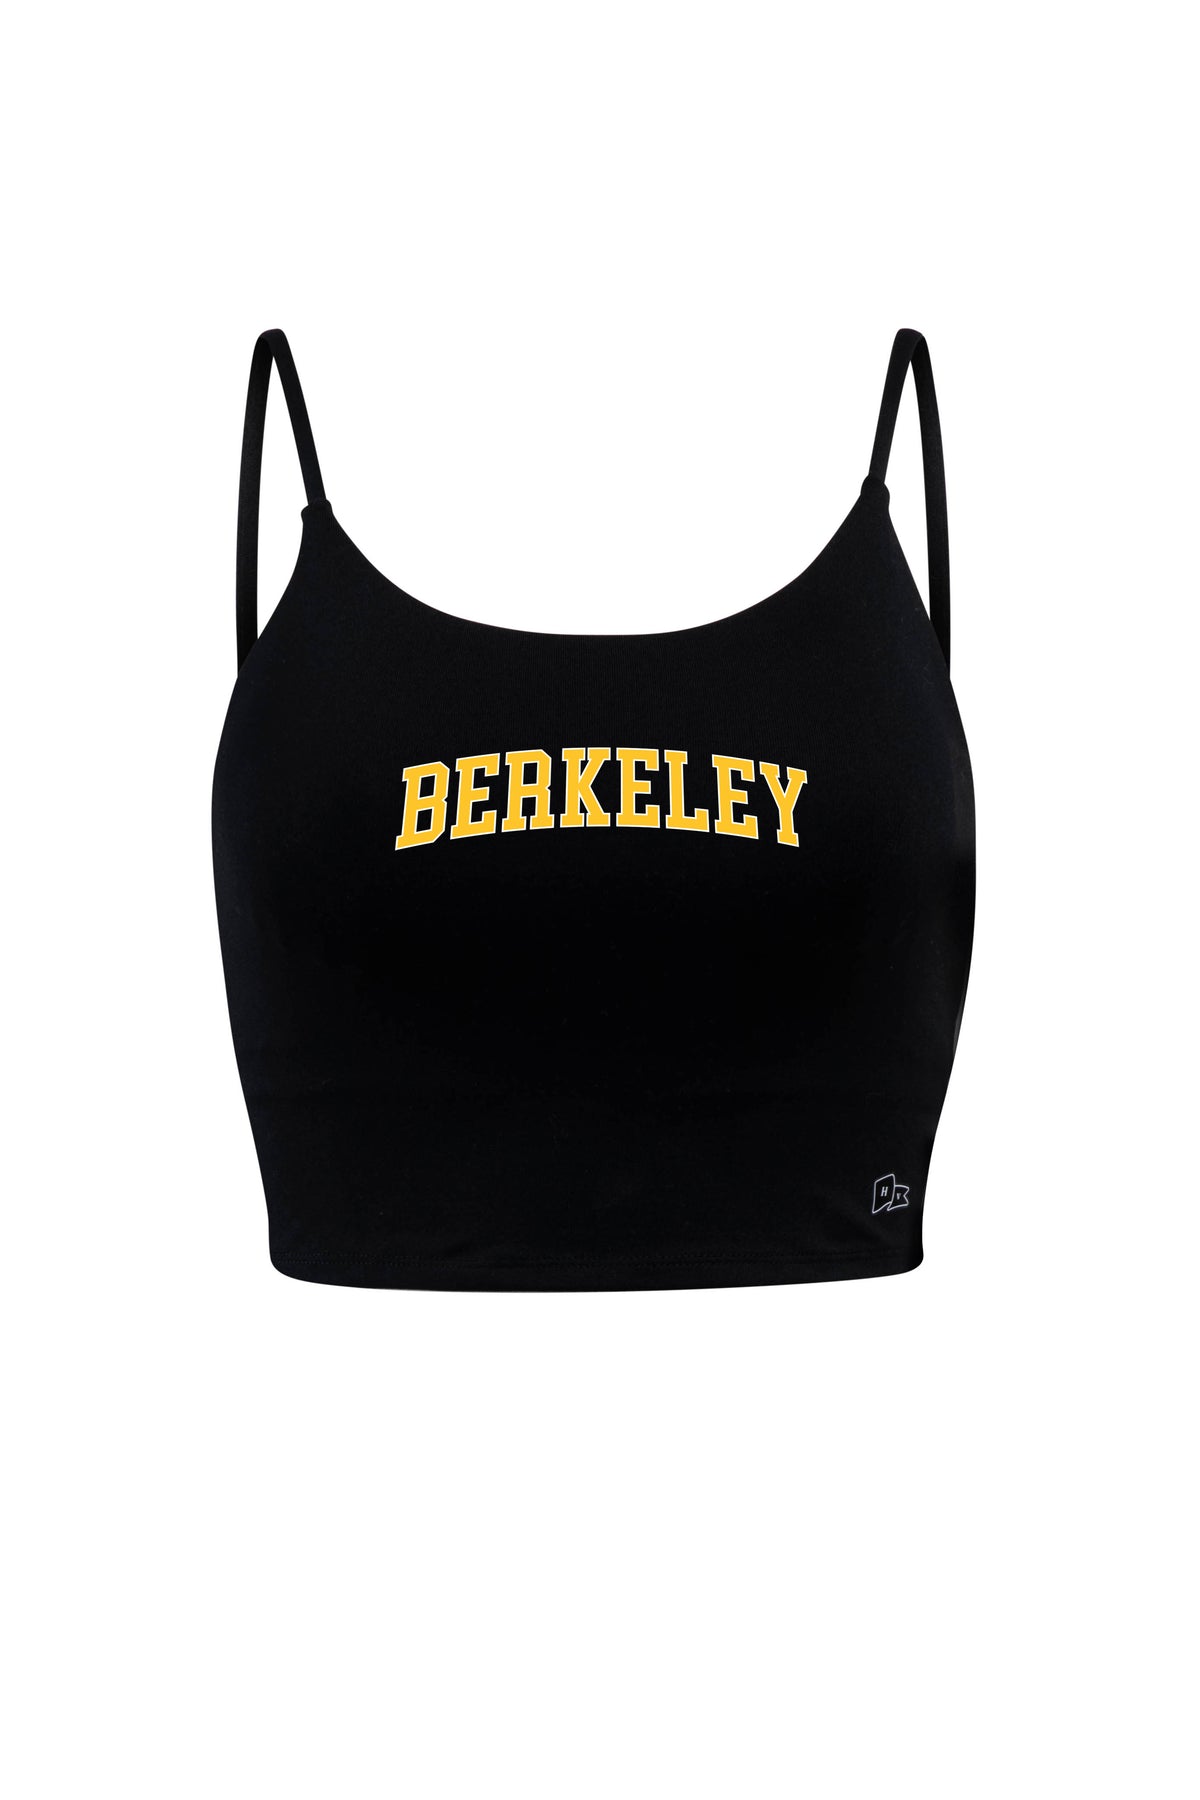 University of California Berkeley Bra Tank Top